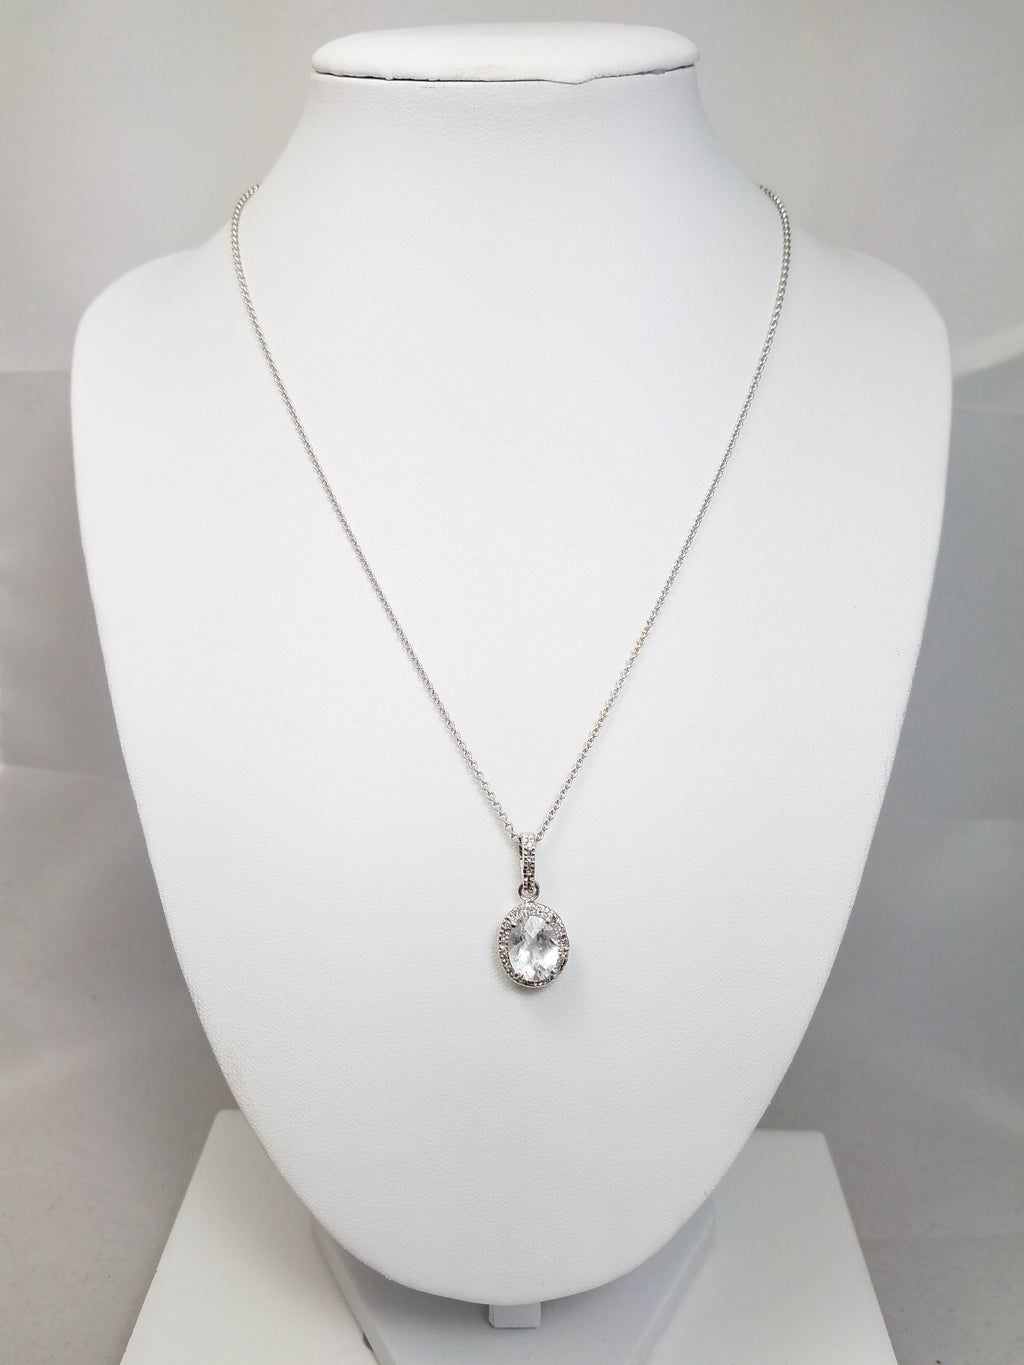 2.5ct Natural White Topaz Diamond Accented 14k White Gold Pendant Necklace